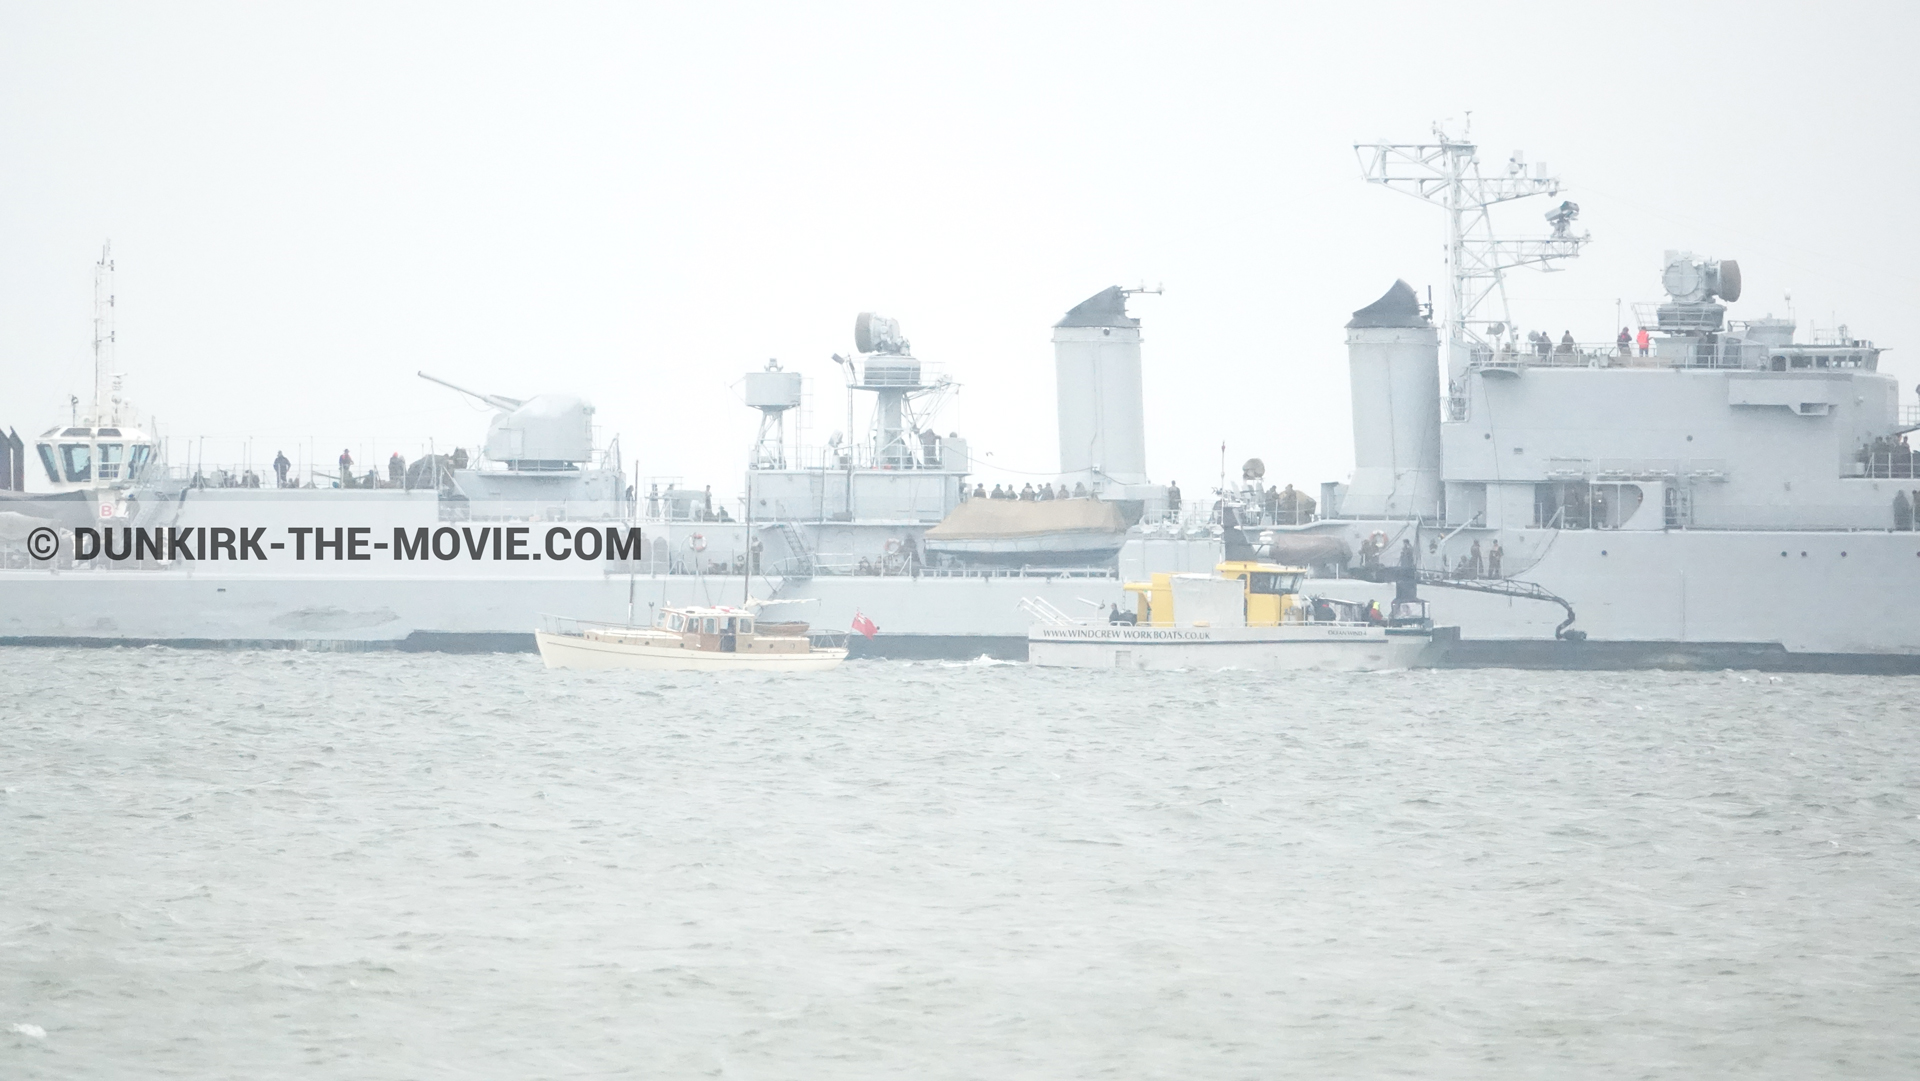 Fotos con barco, Maillé-Brézé - D36 - D54, mares calma,  durante el rodaje de la película Dunkerque de Nolan